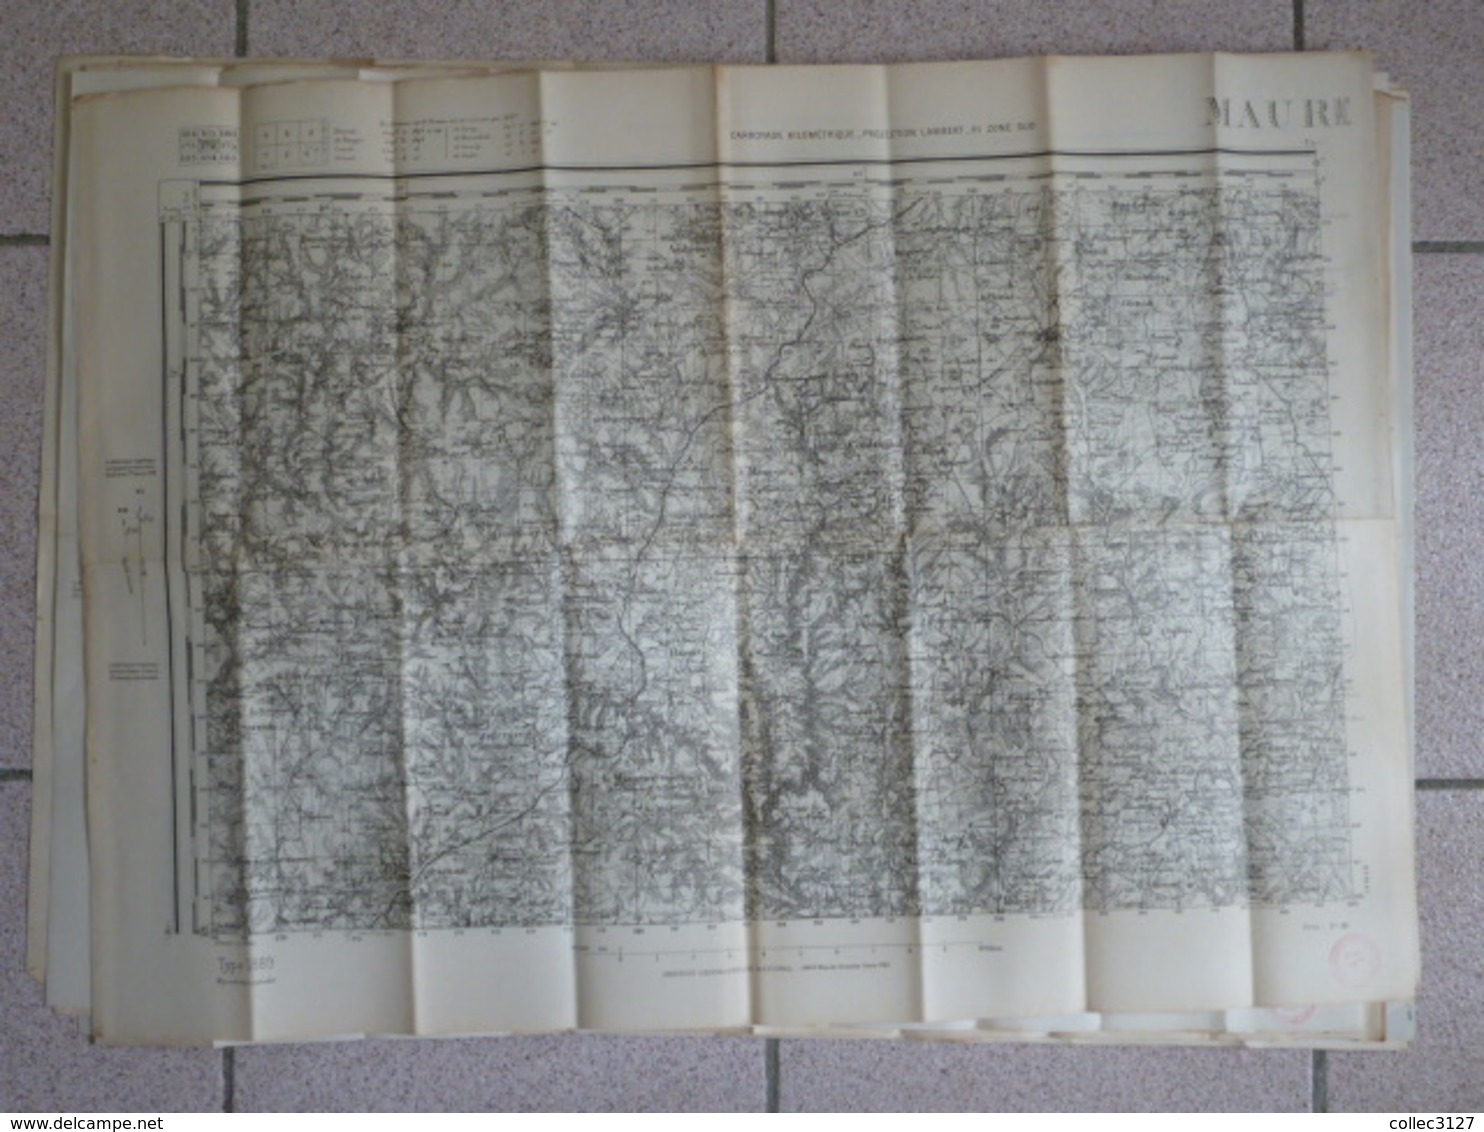 Lot De 16 Cartes D'Etat Major Type 1889 -  75*54cm Environ - Landkarten